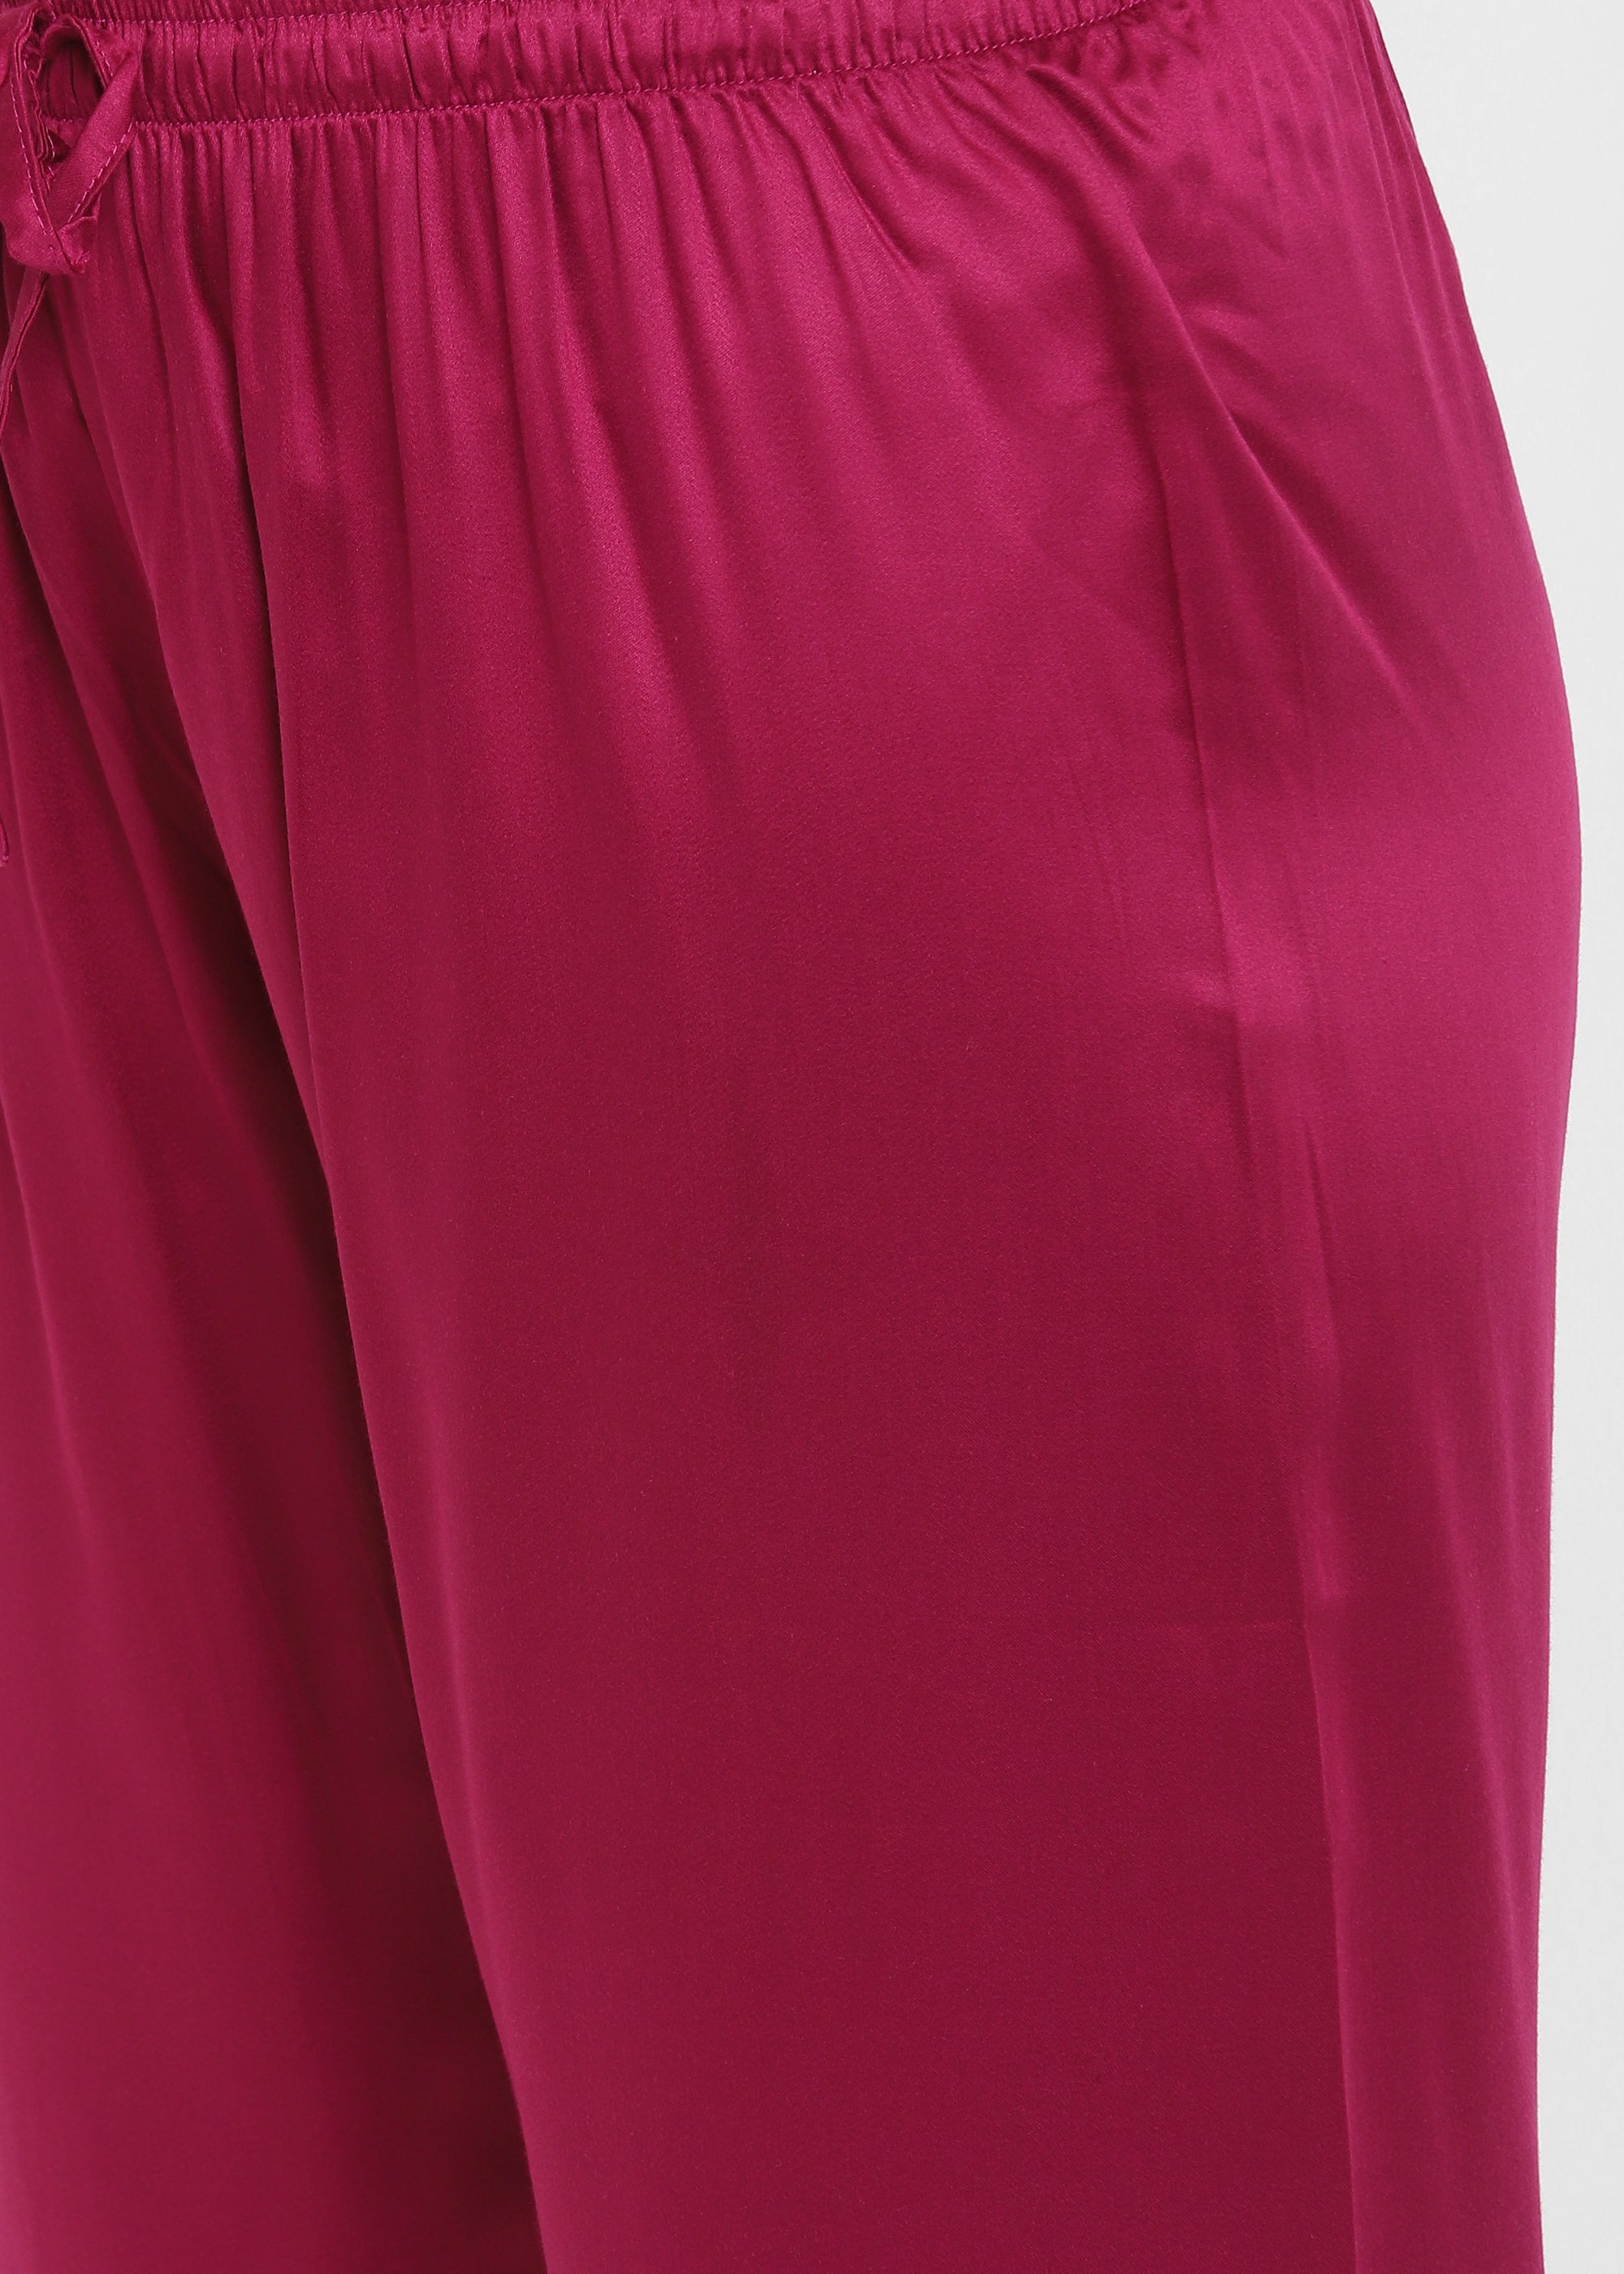 Ultra Soft Magenta Modal Satin Long Sleeve Women's Night Suit - Shopbloom